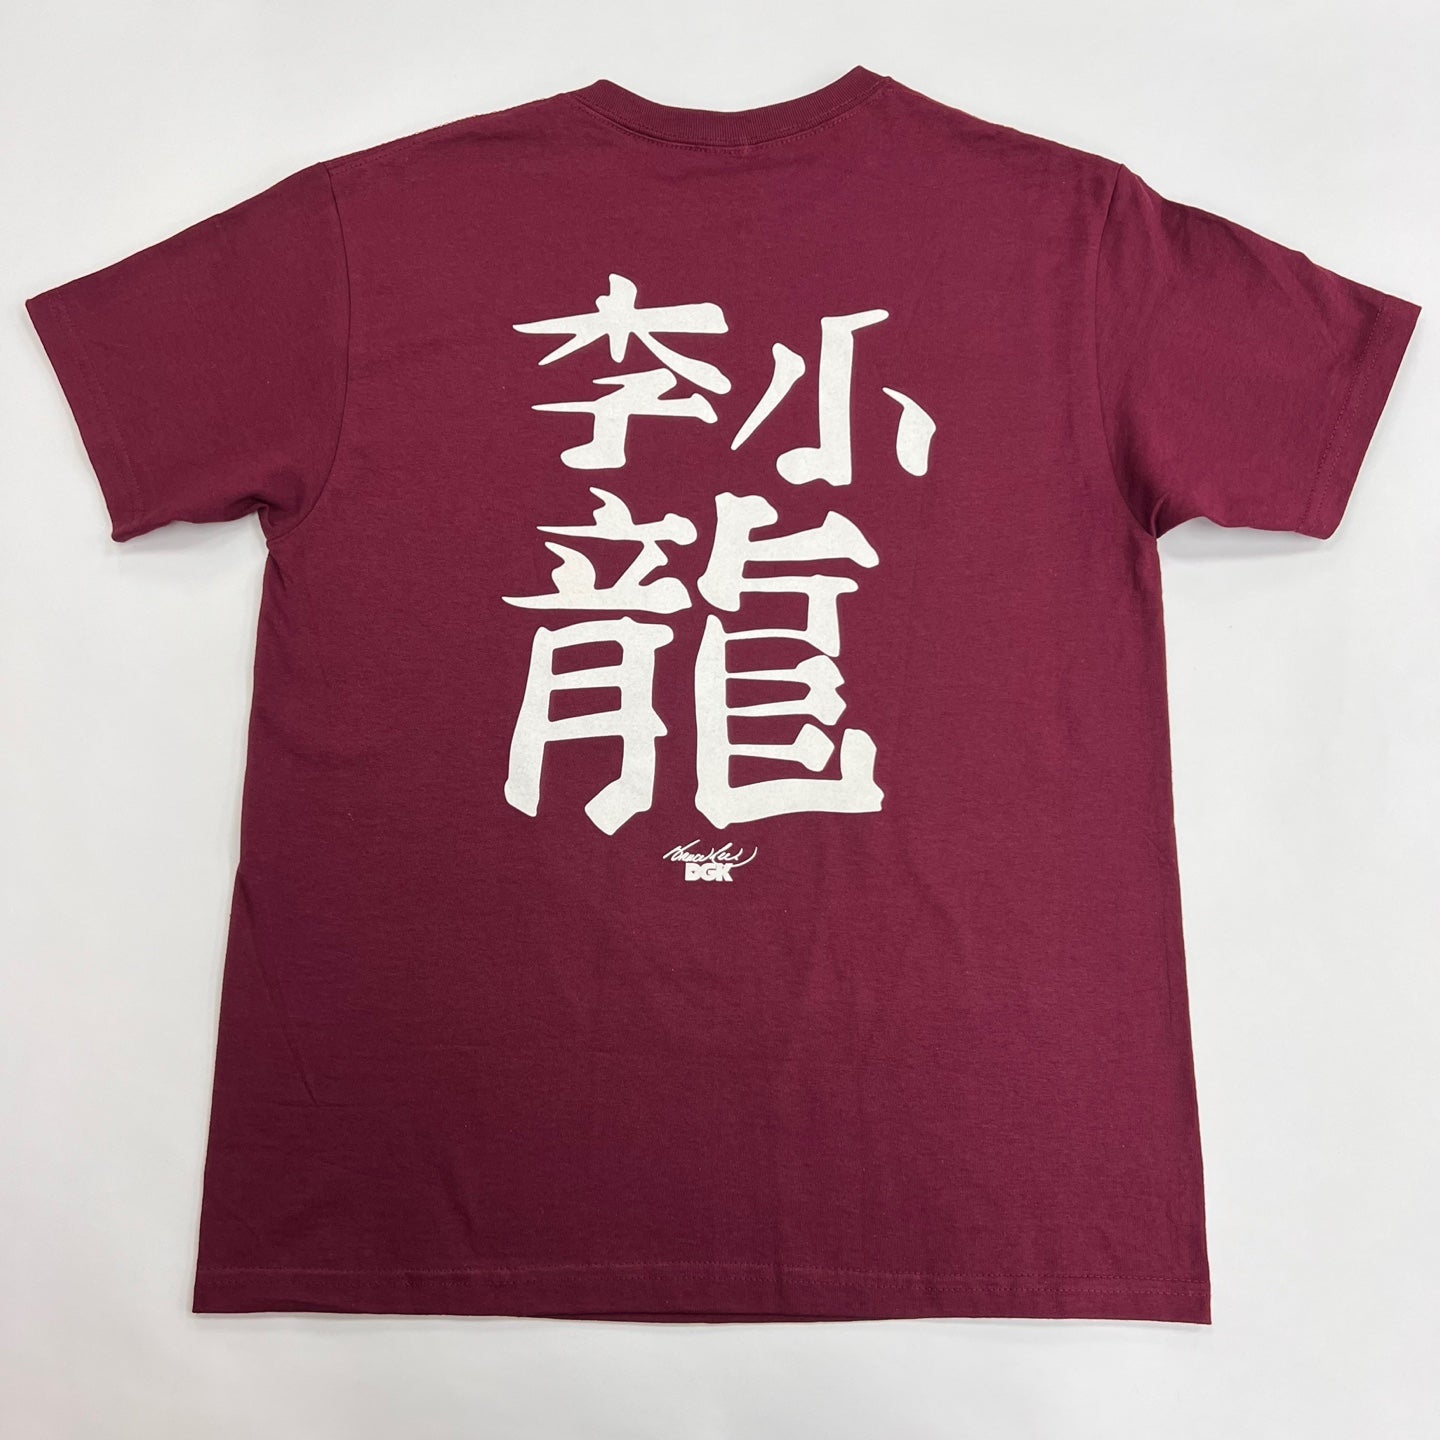 DGK X Bruce Lee Graphic Print T-Shirt